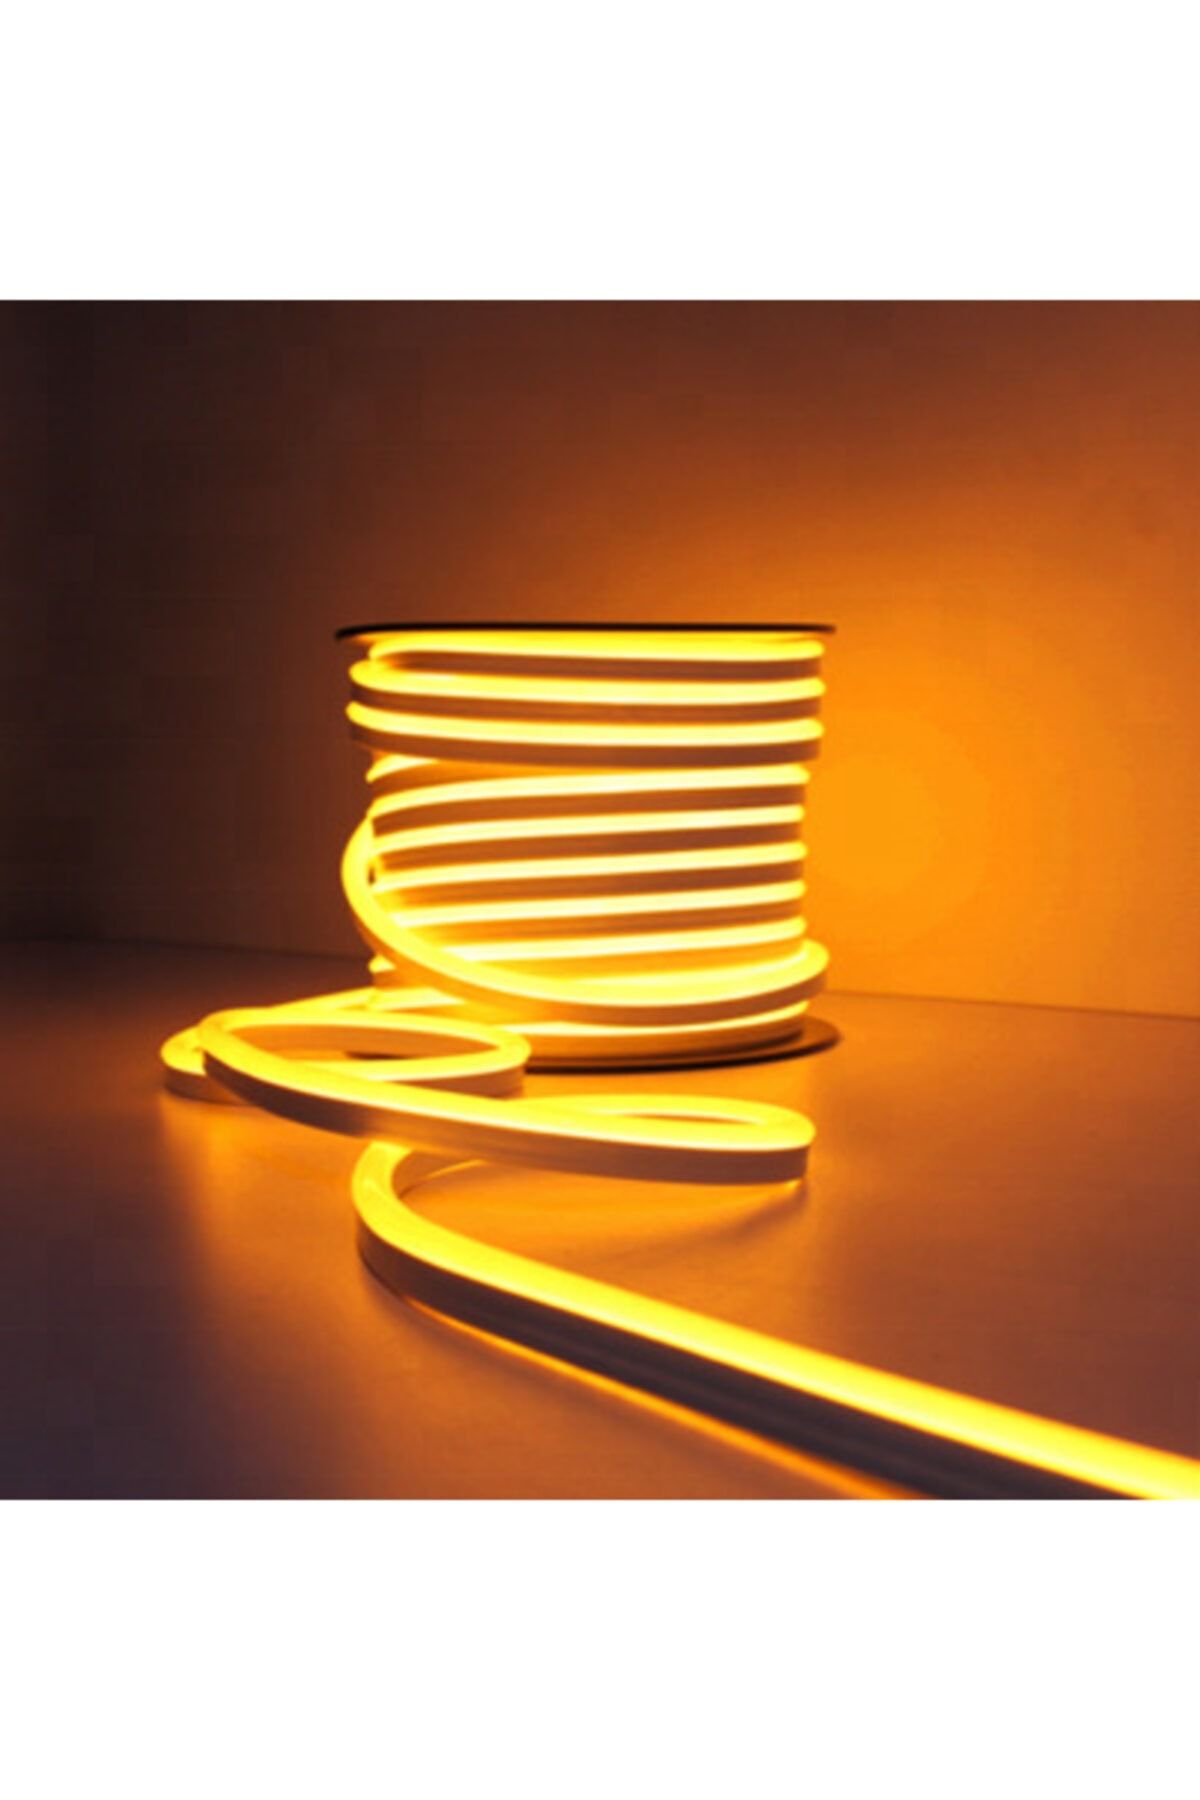 euroneon Neon Hortum Led 20mt Amber Dekoratif Işıklandırma